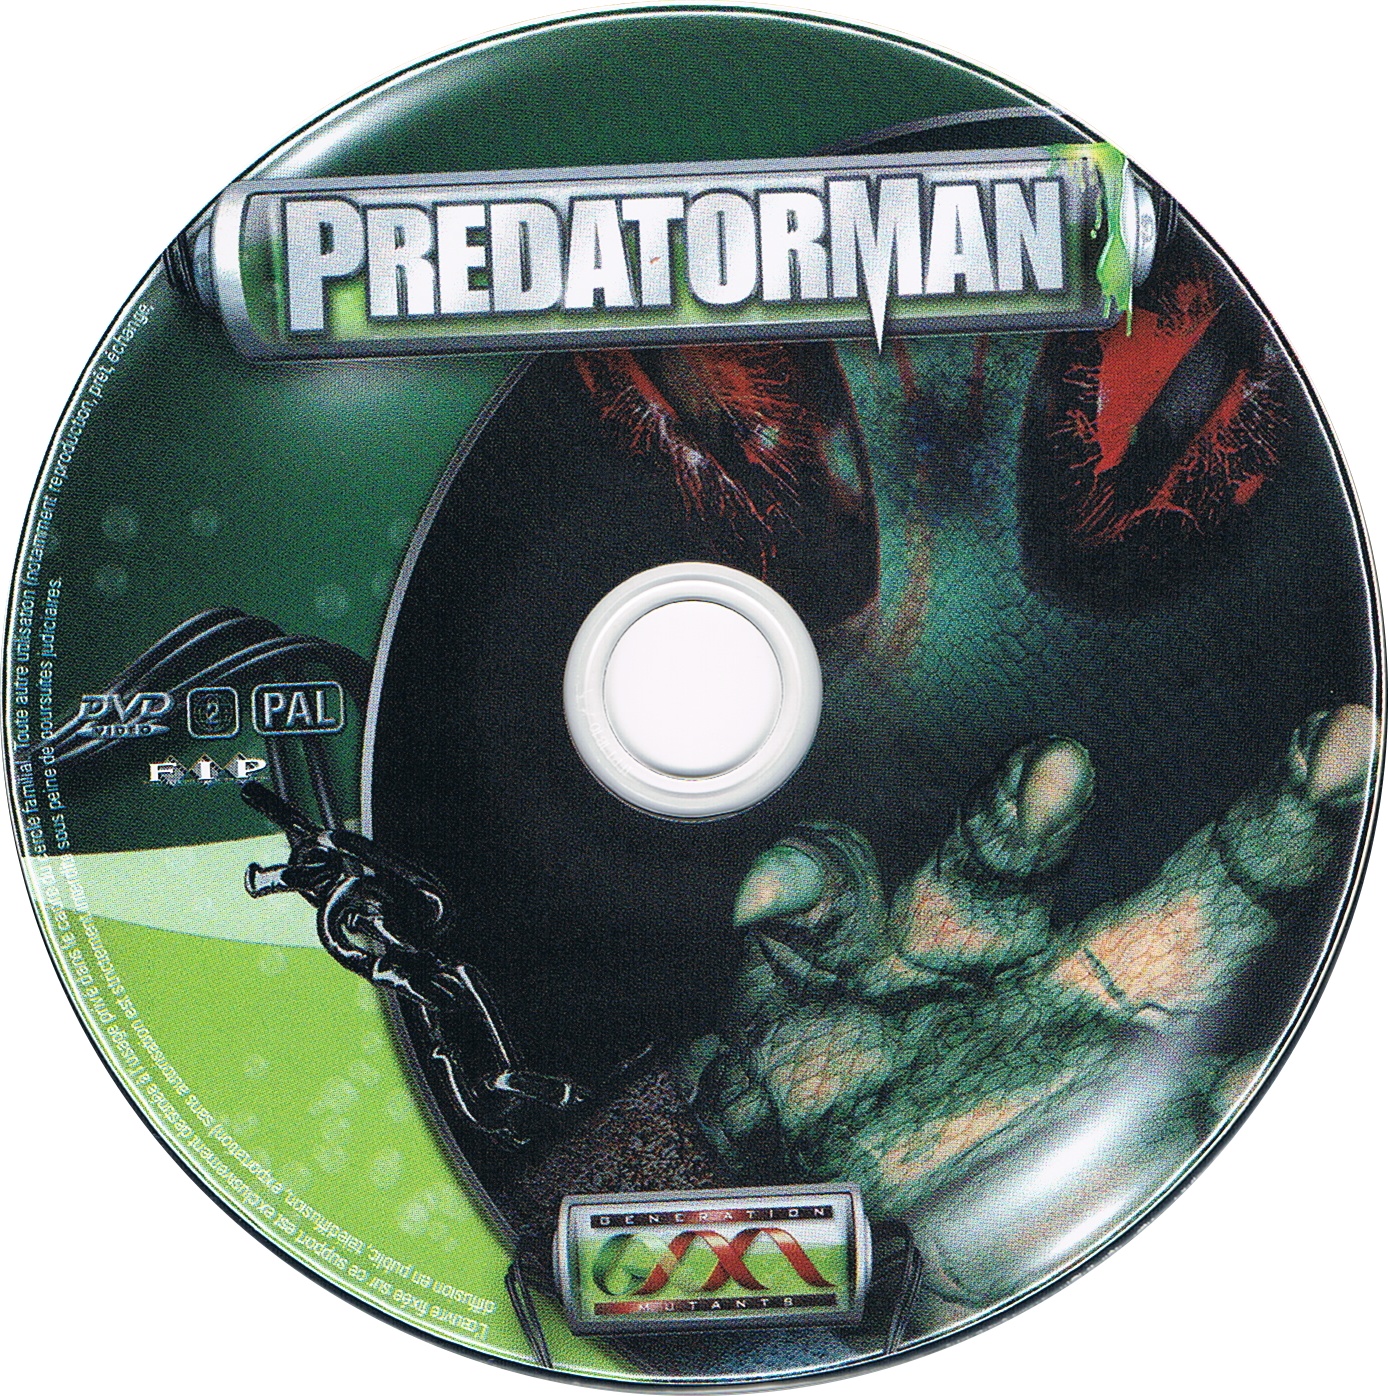 Predatorman